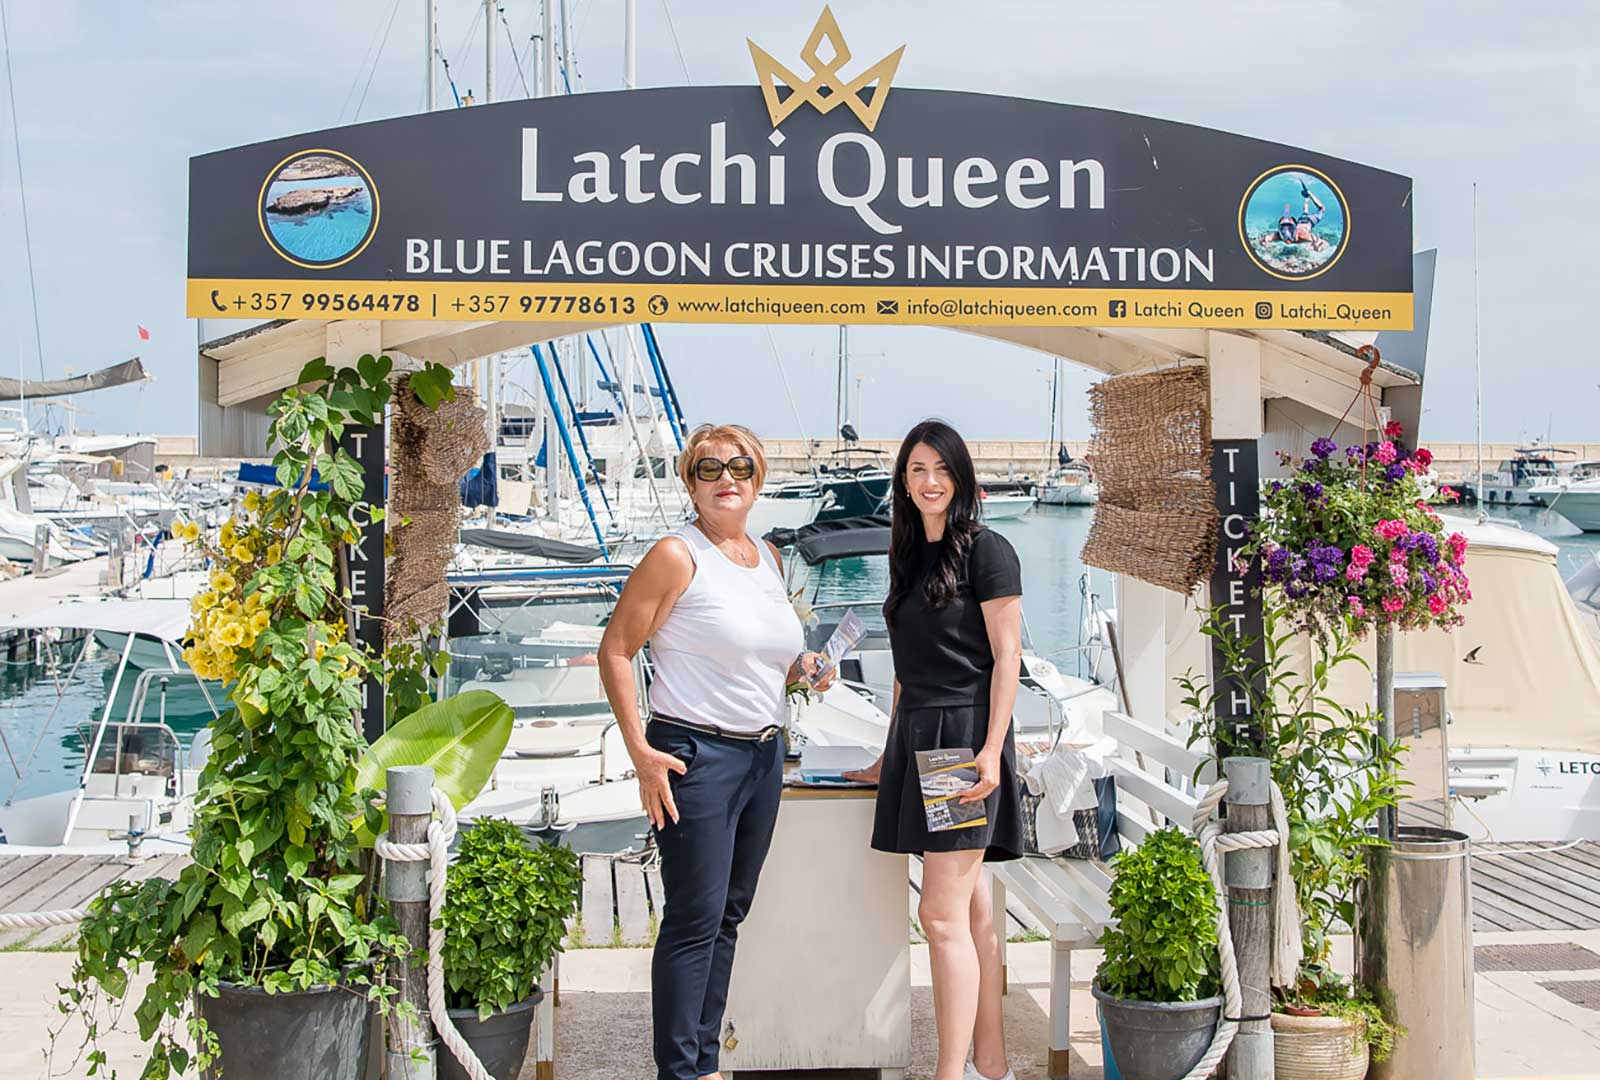 Latchi Queen Blue Lagoon Cruises from Latchi Harbour